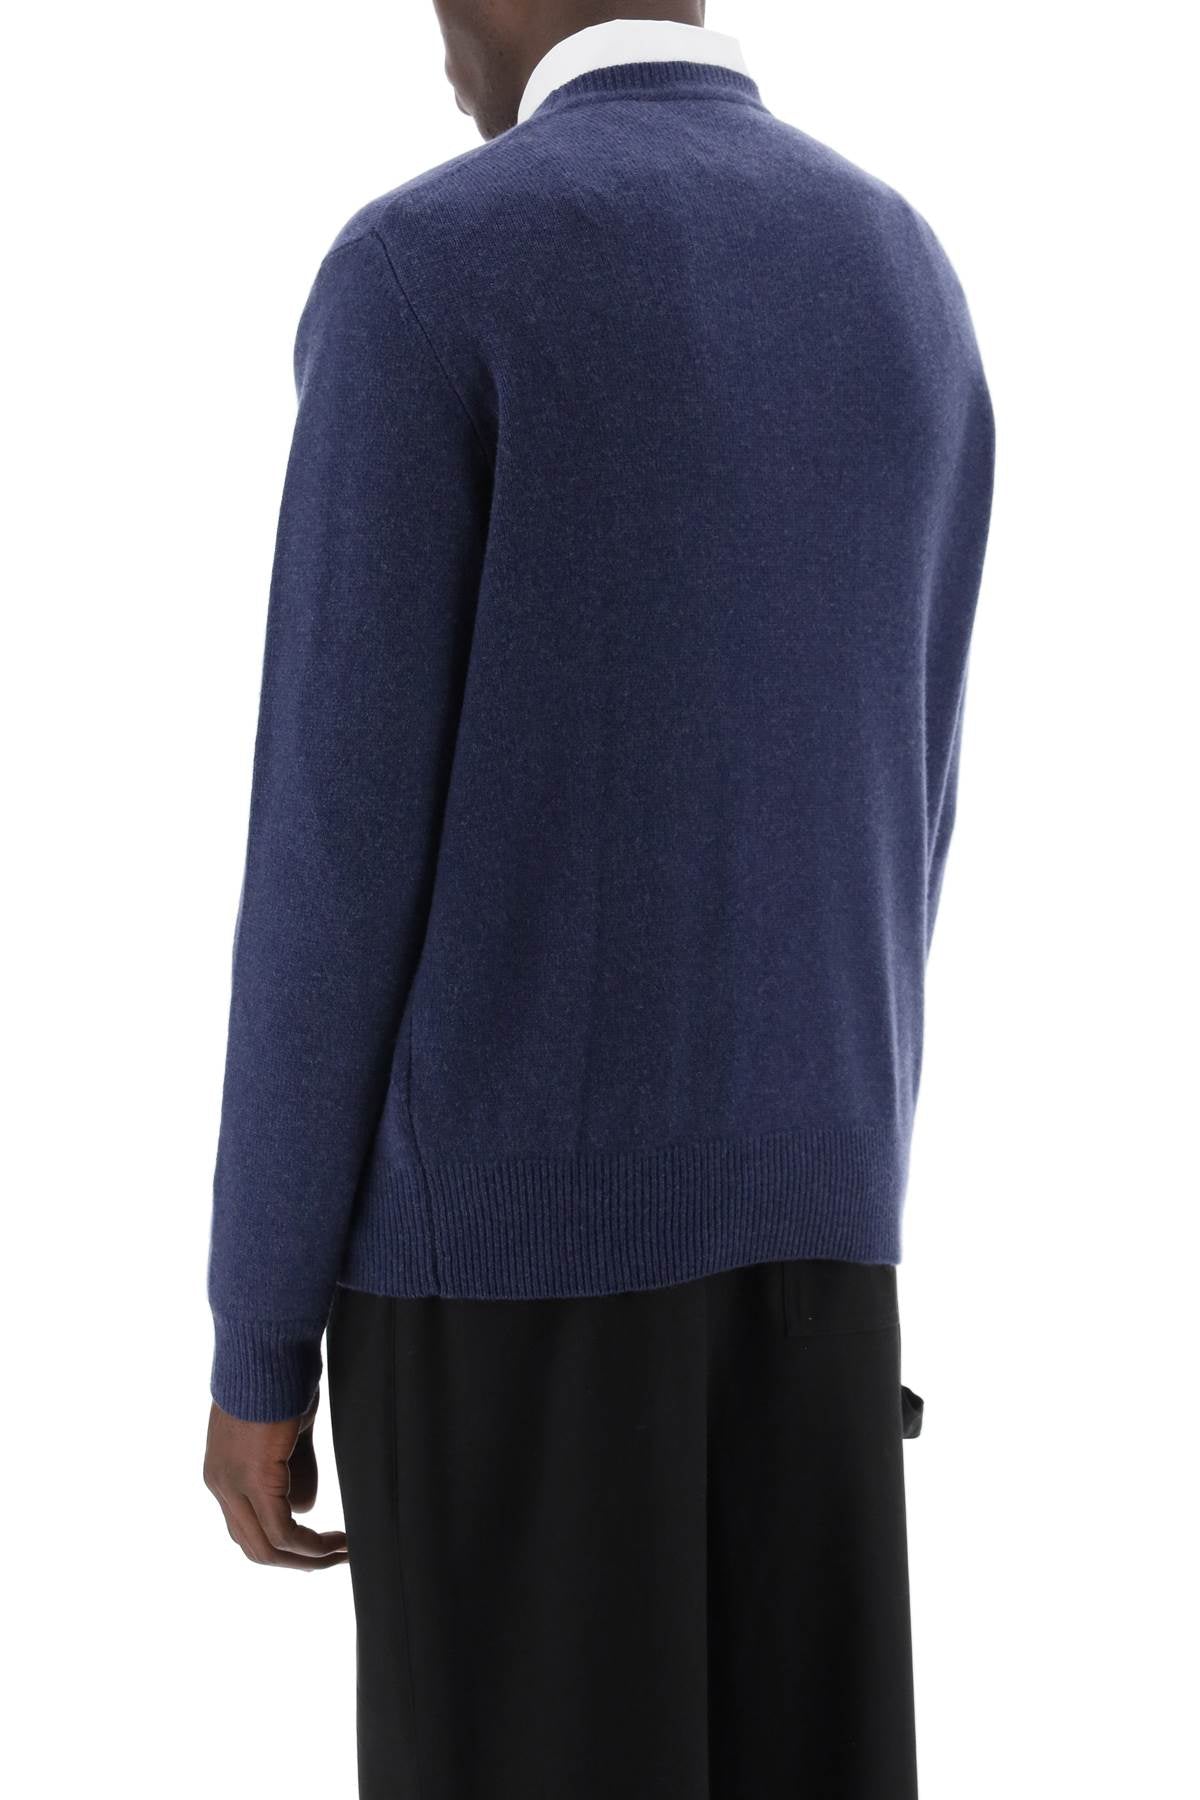 Vivienne Westwood Vivienne westwood alex merino wool sweater